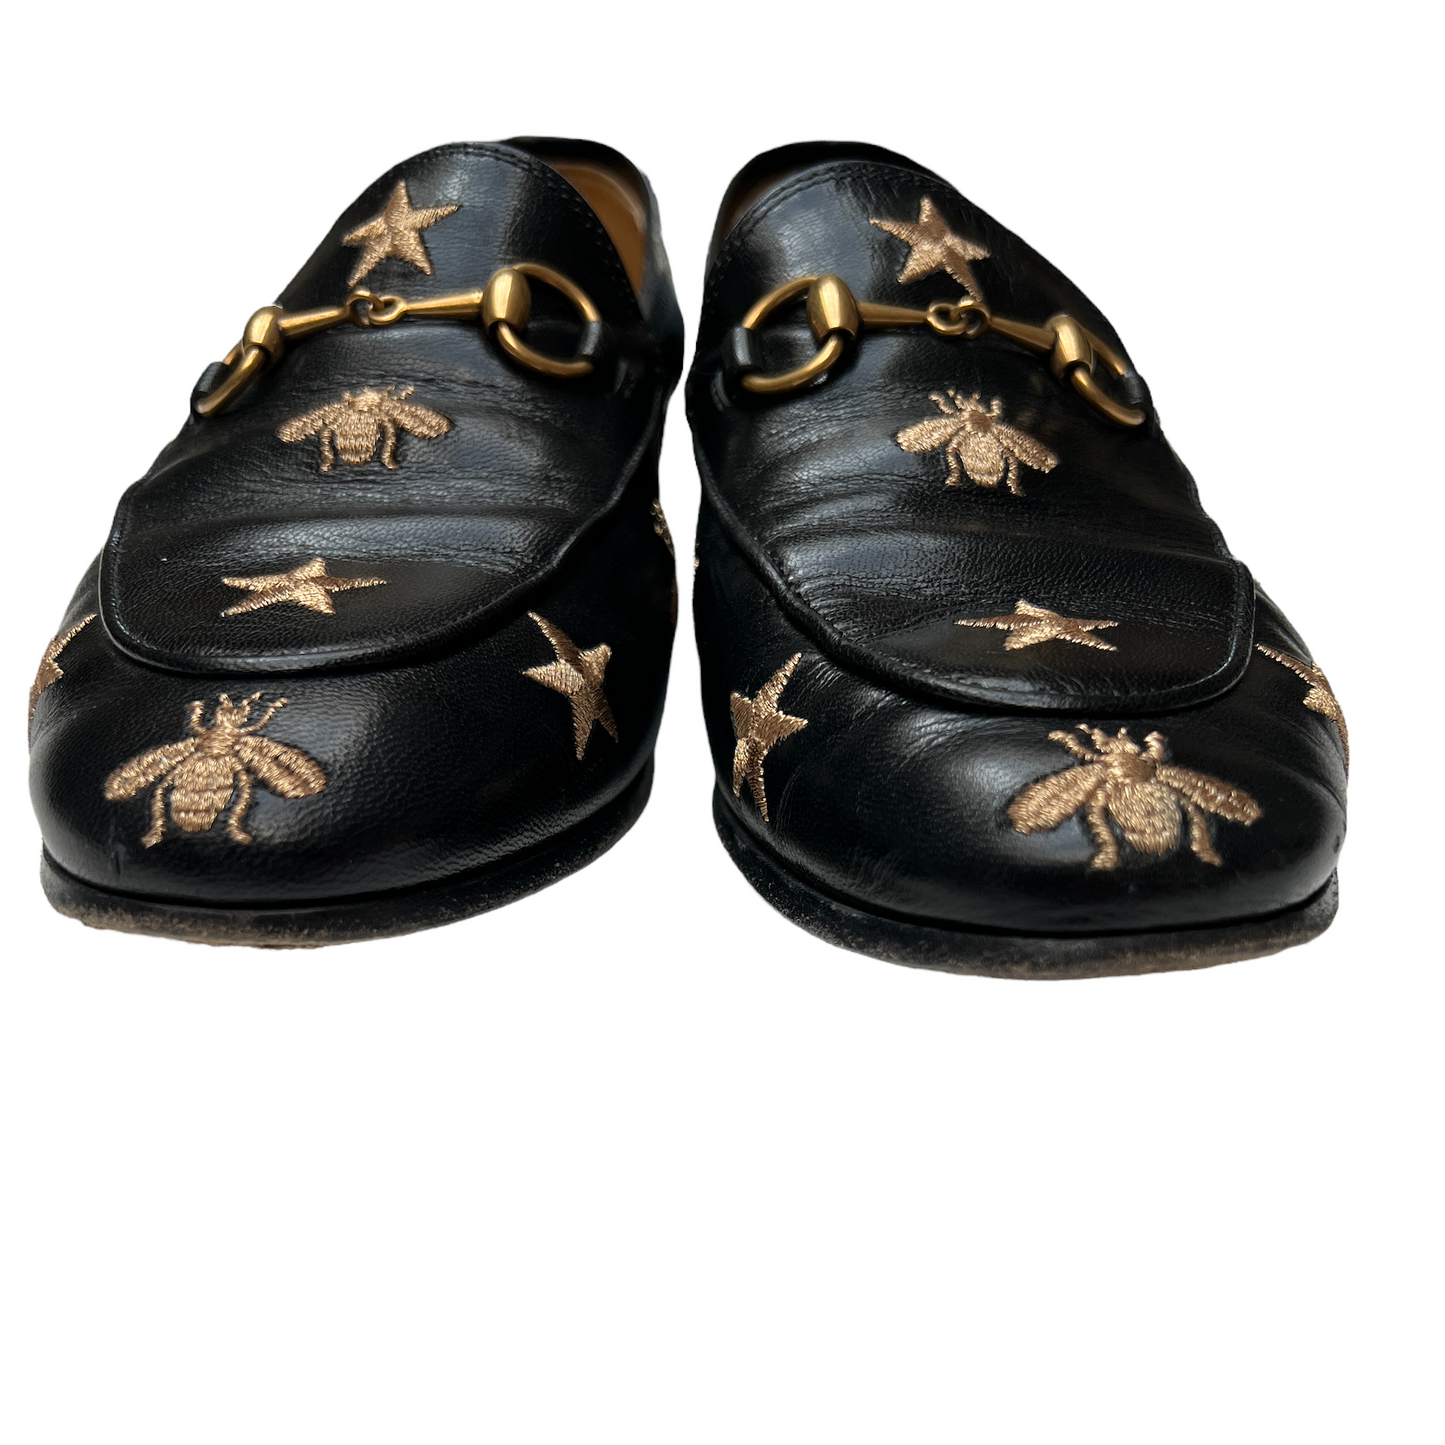 Jordan Leather Loafers - 7